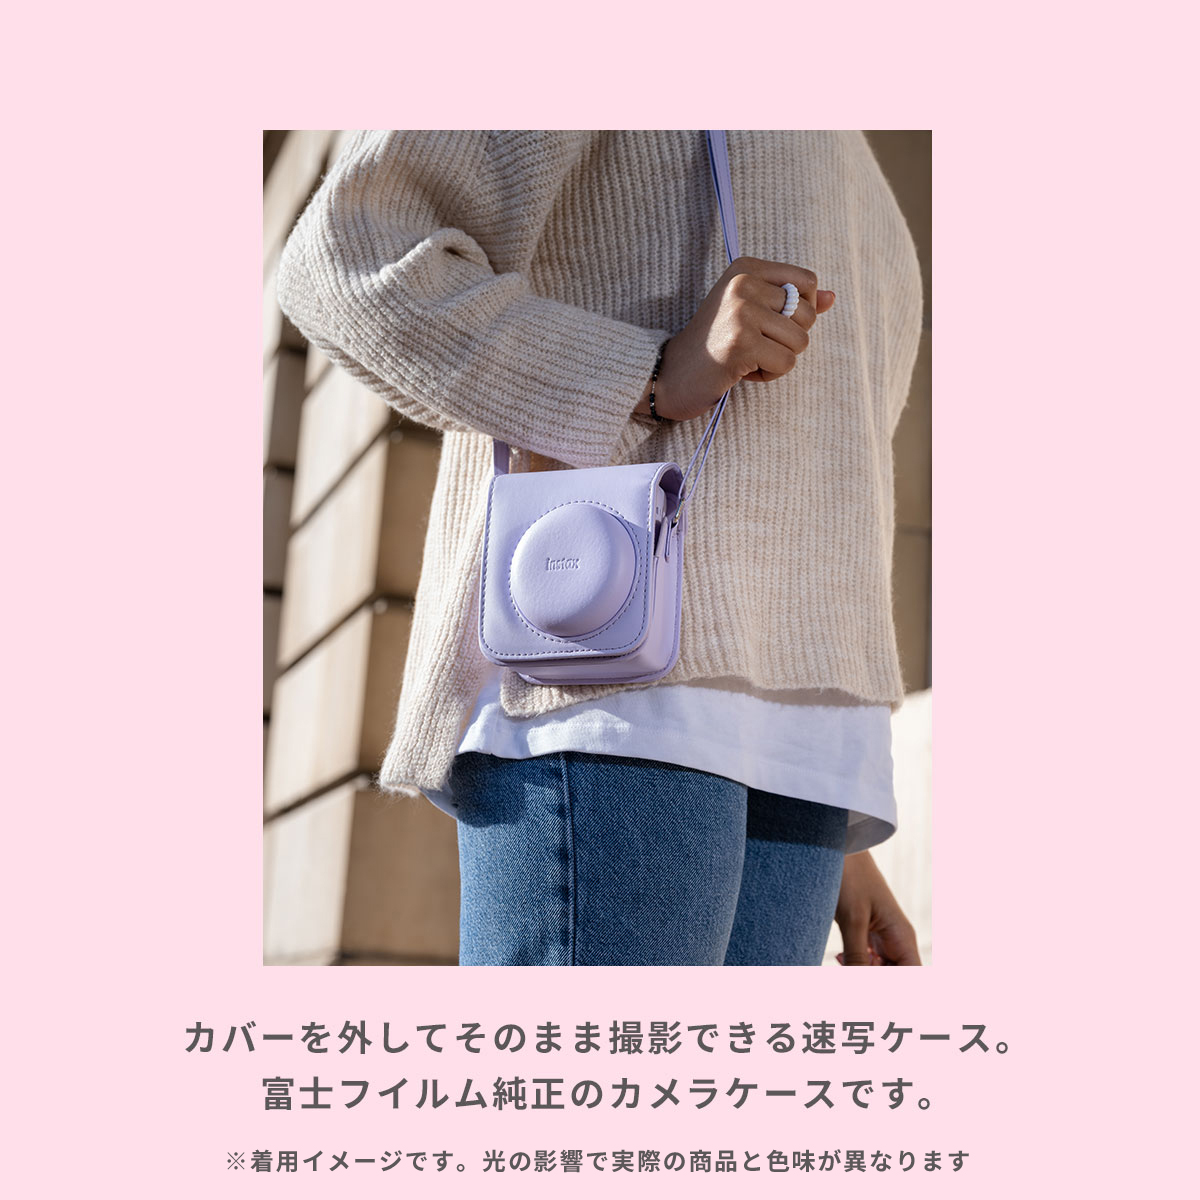 [ gift Cheki ] Fuji film Cheki instant camera instax mini 12[ lilac purple ] camera case attaching gift BOX set 